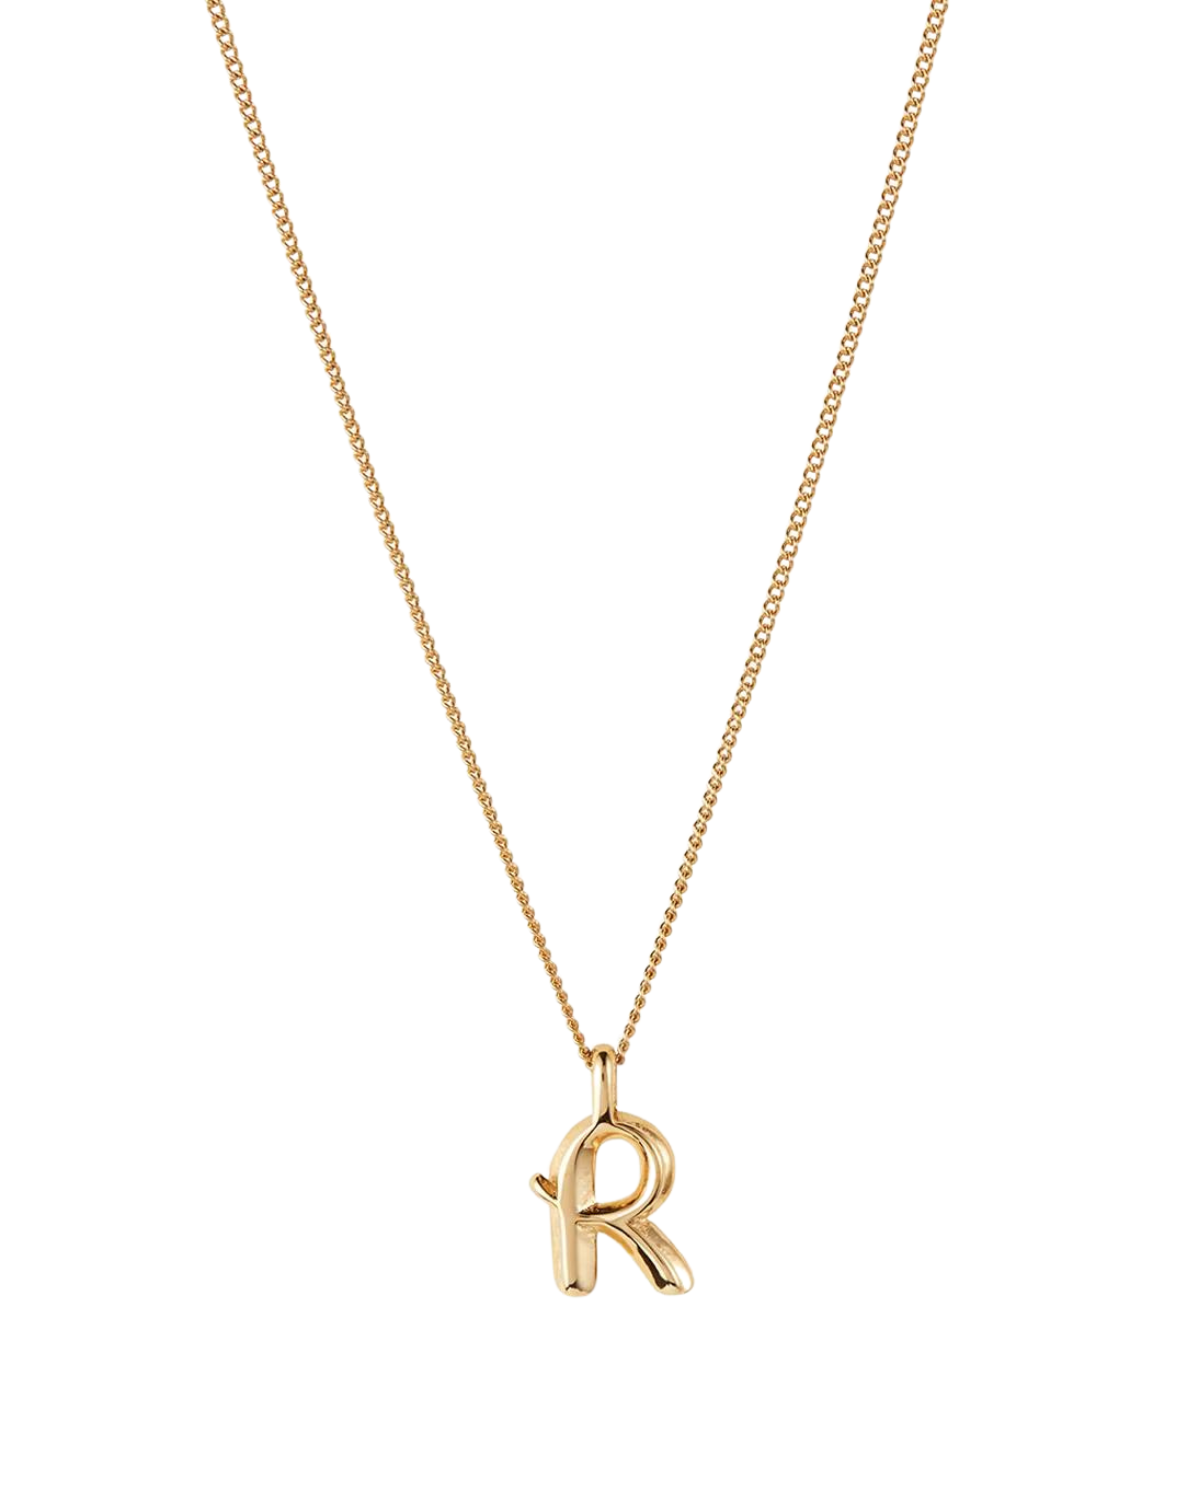 Monogram Necklace - R (Gold)